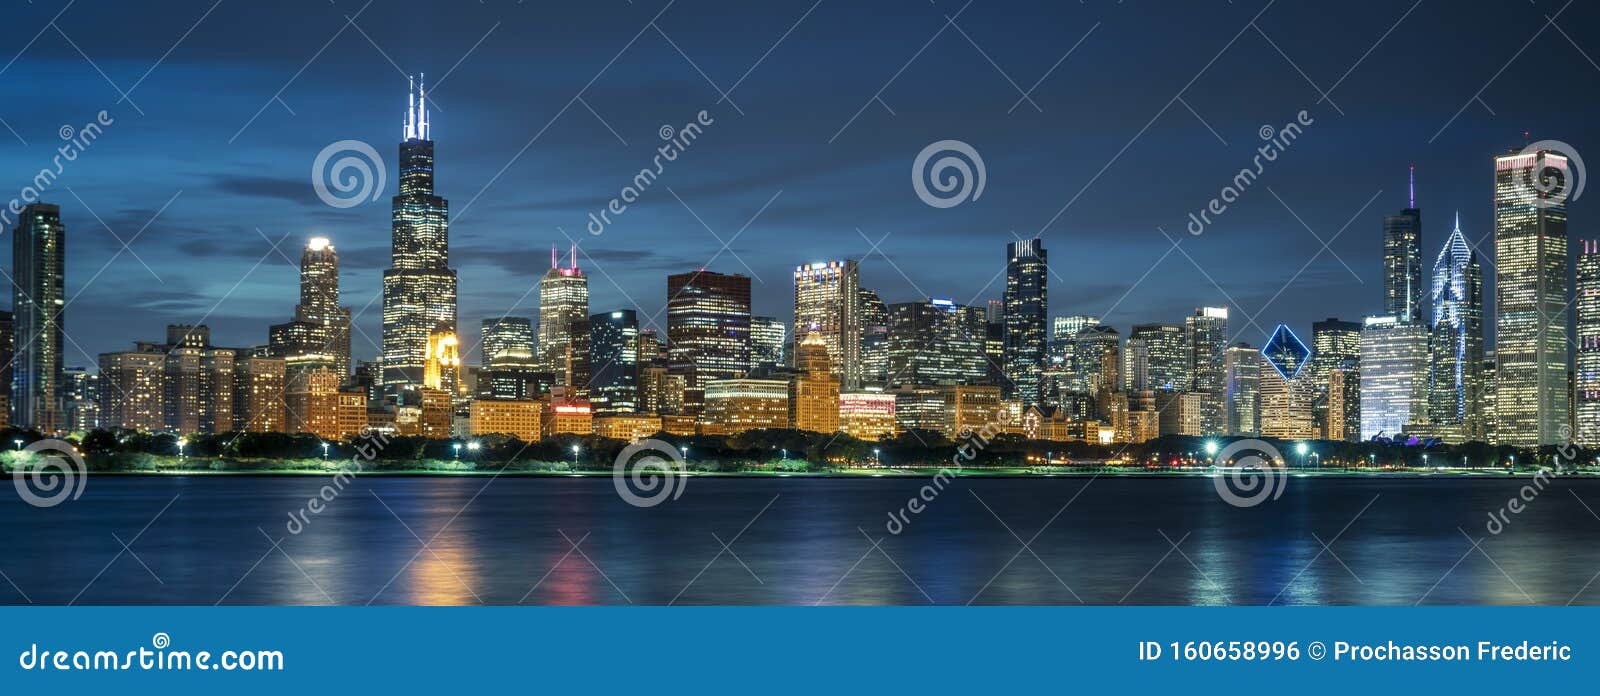 chicago skyline by night, panoramic view